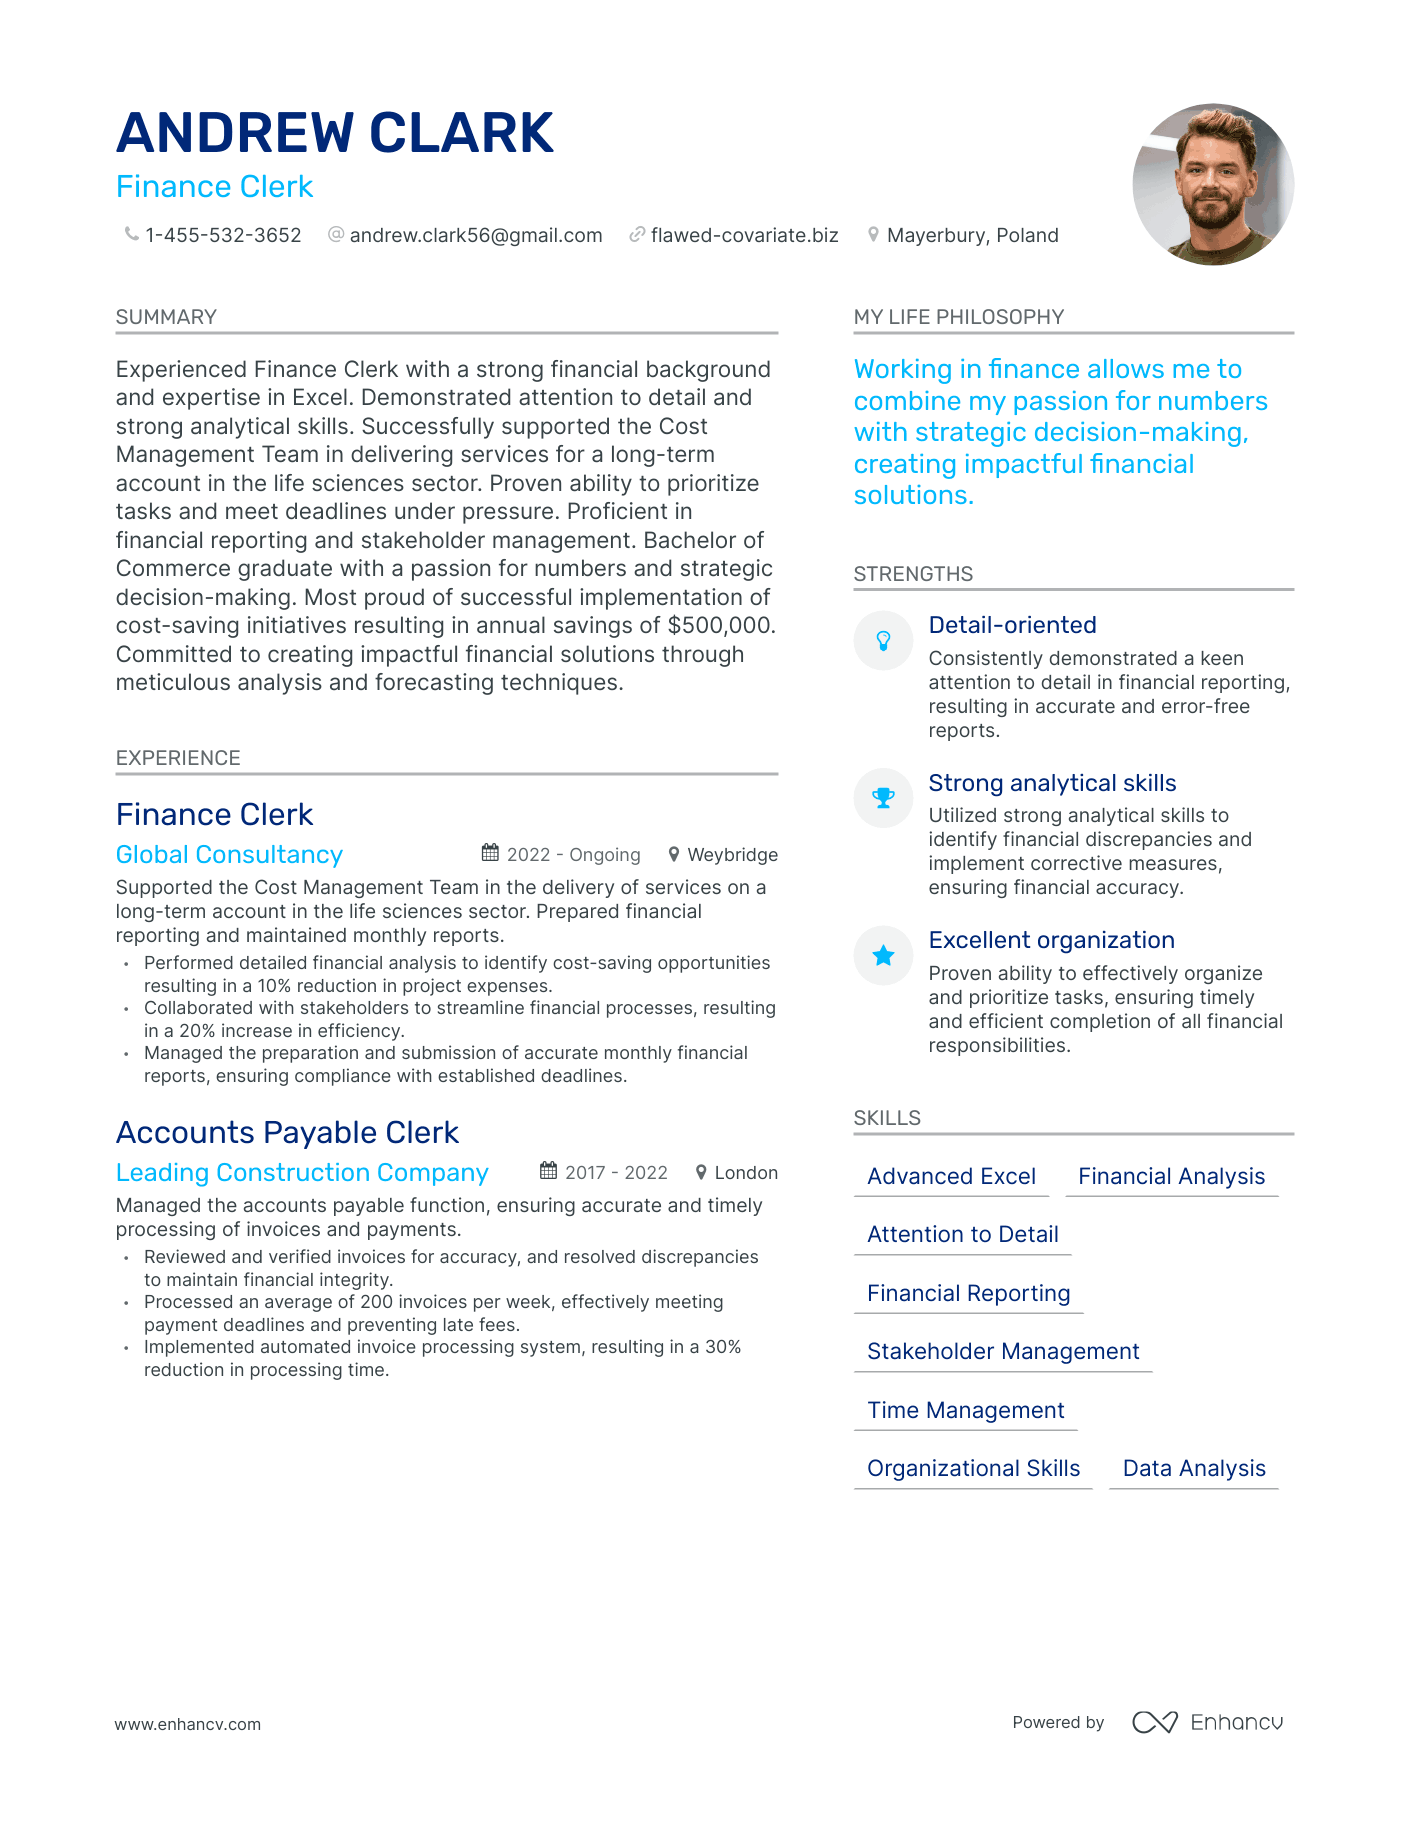 Finance Clerk resume example